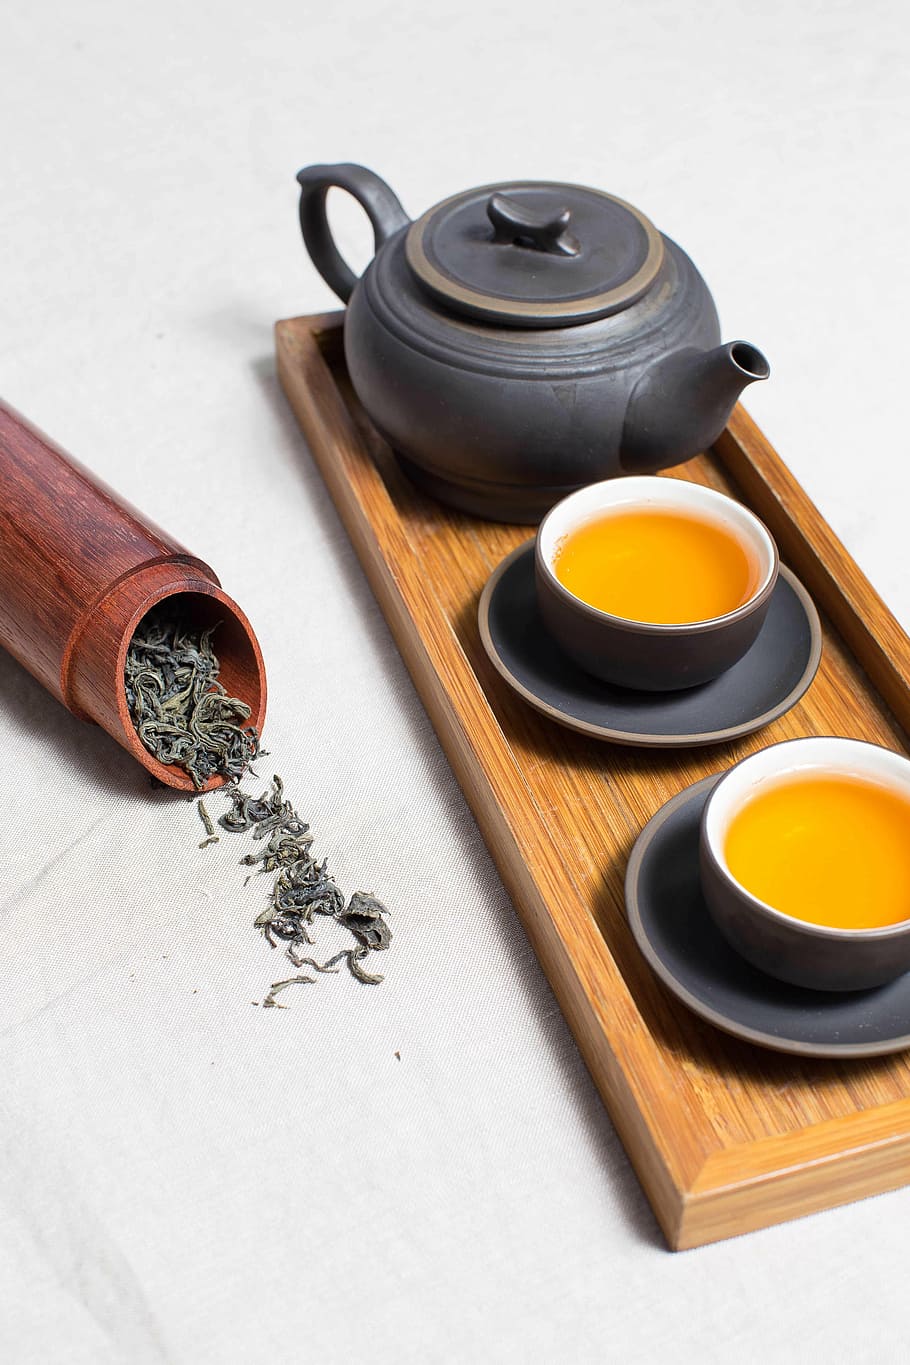 black, teapot, teacup, saucer, bamboo, beverage, breakfast, caffeine, cup, dried tea leaves